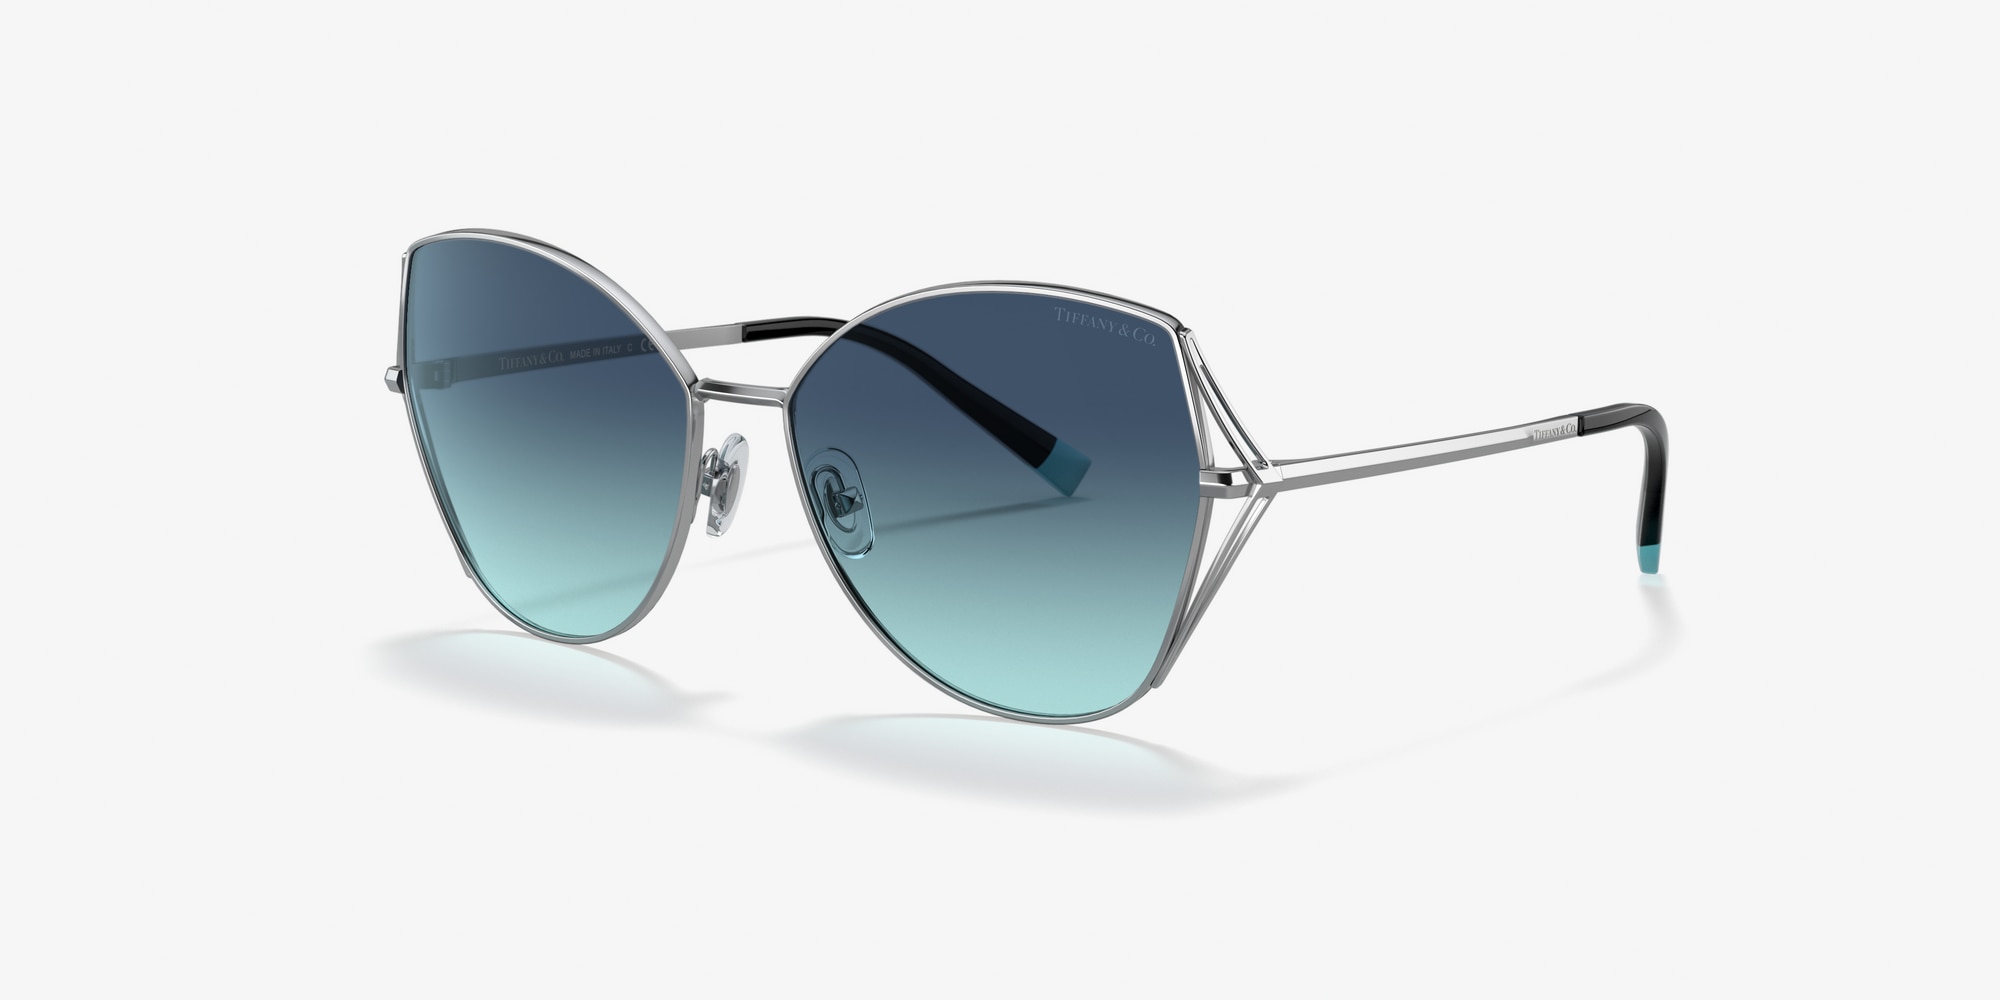 tiffany blue sunglasses